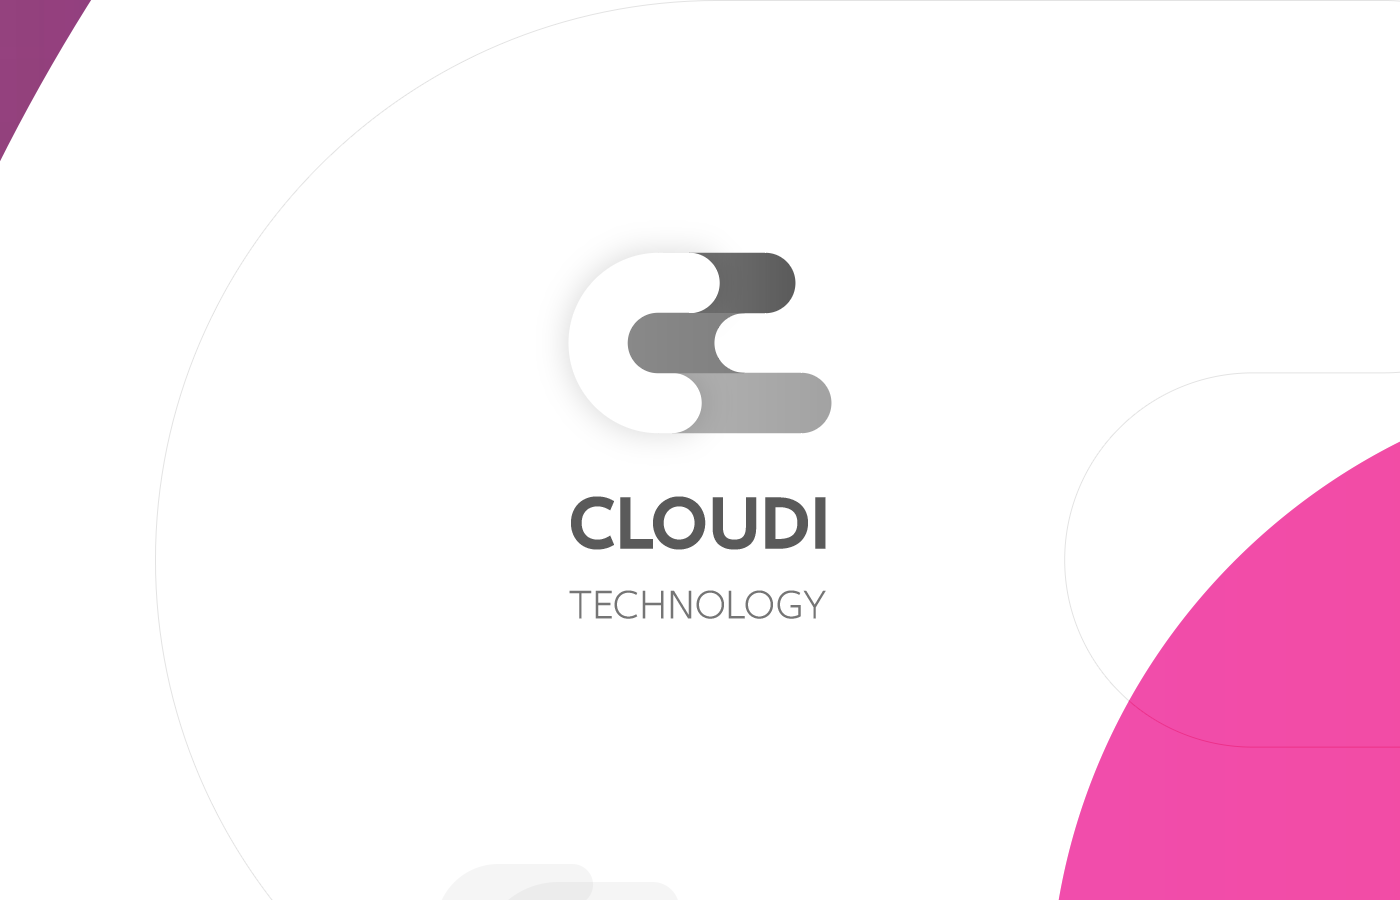 Cloudi Technology Branding